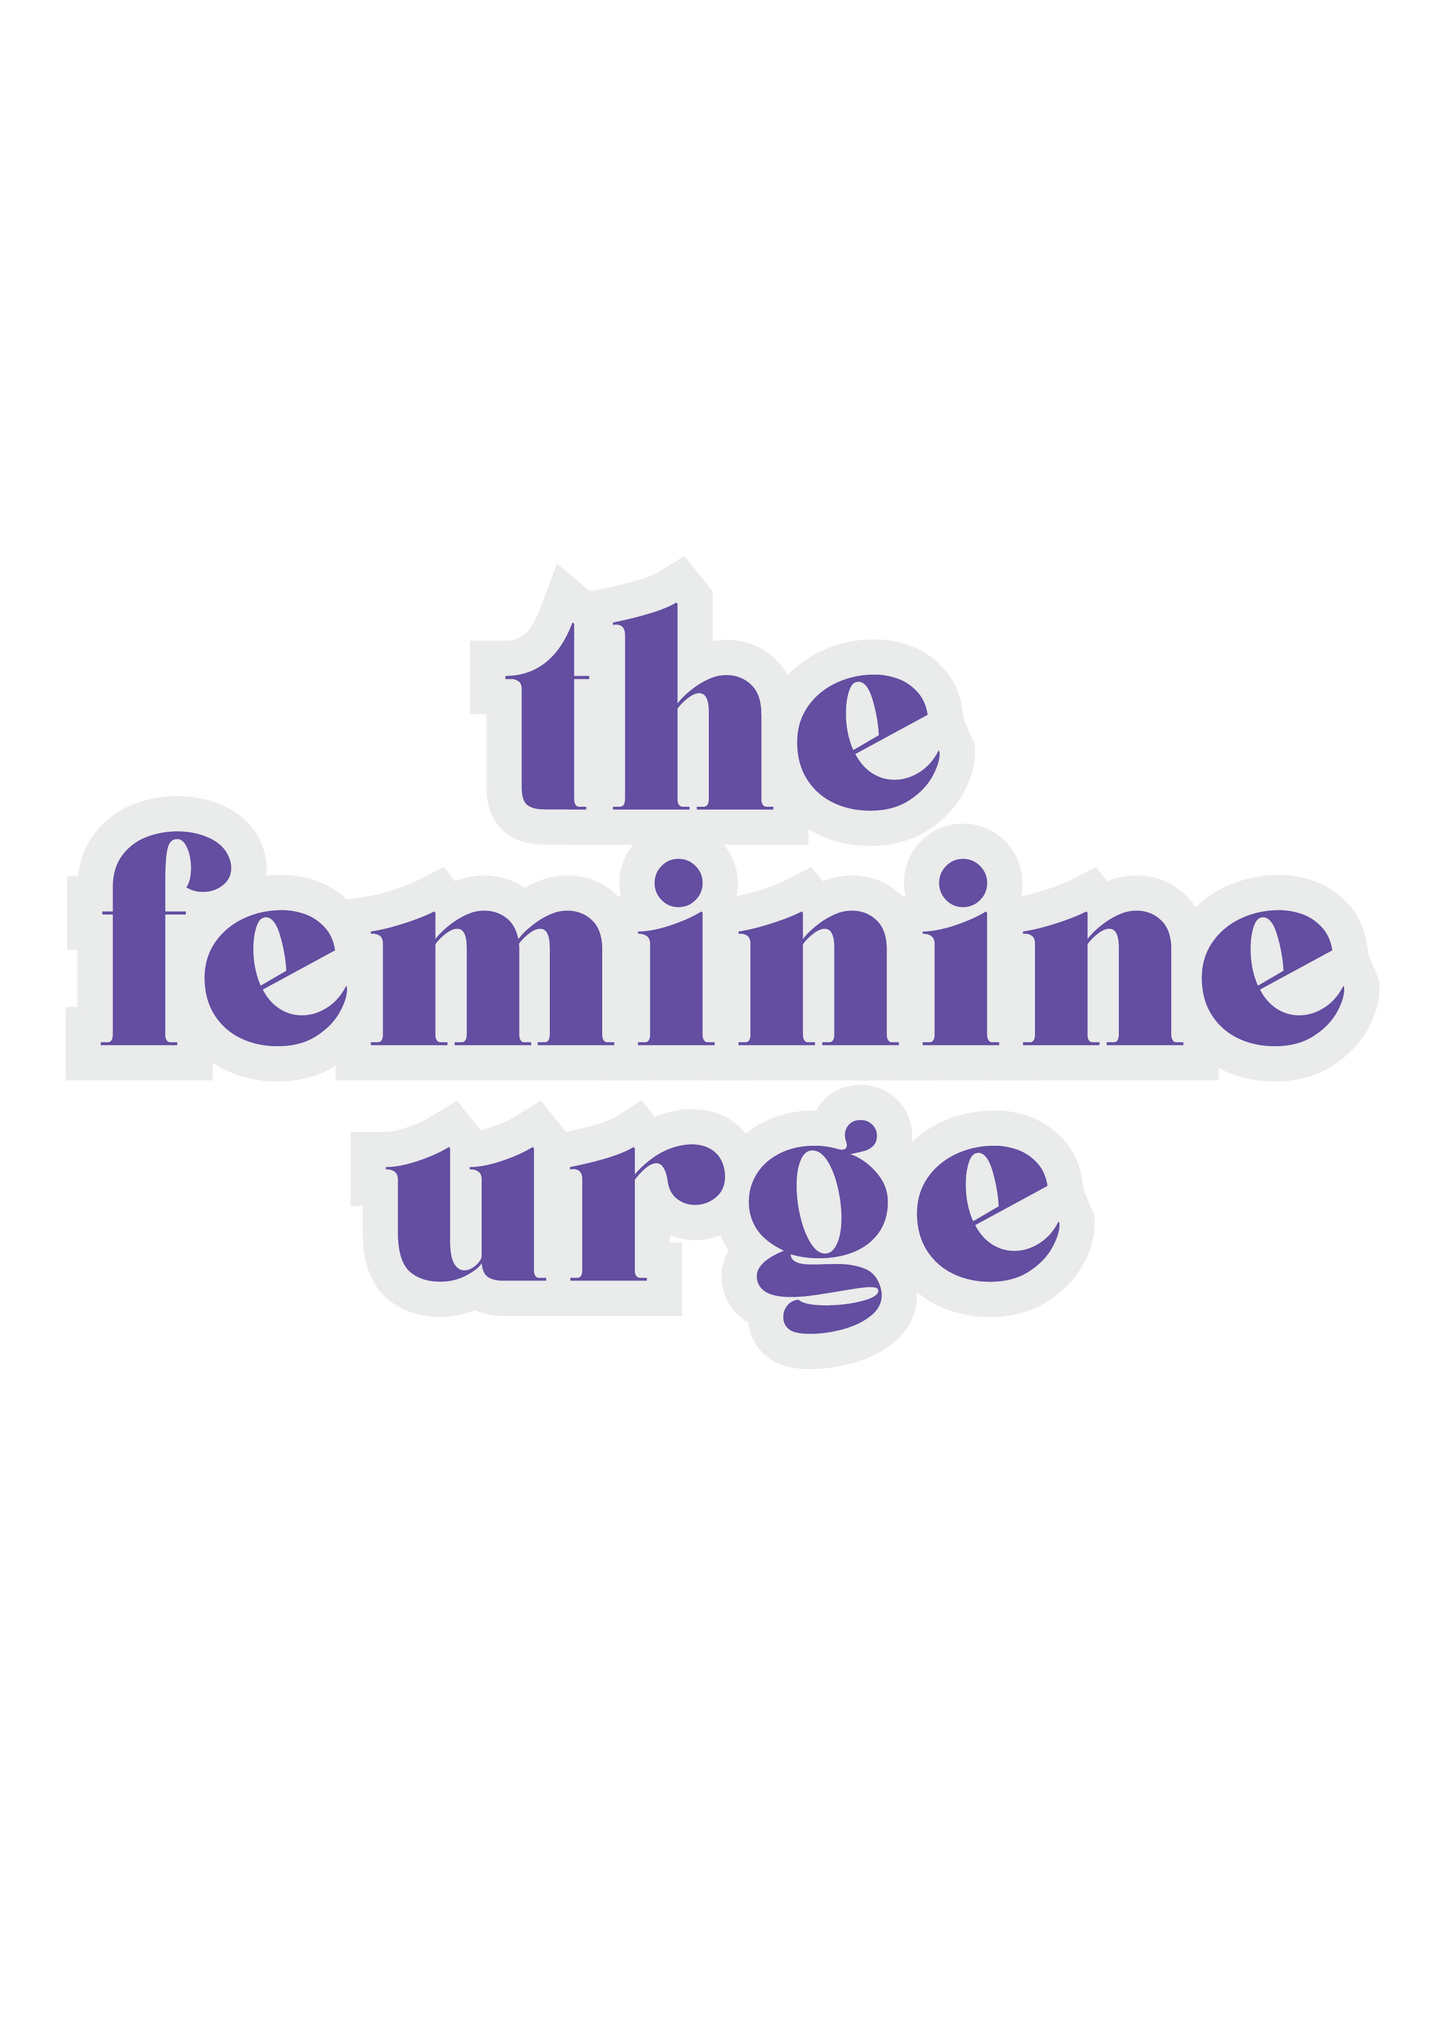 The Feminine Urge